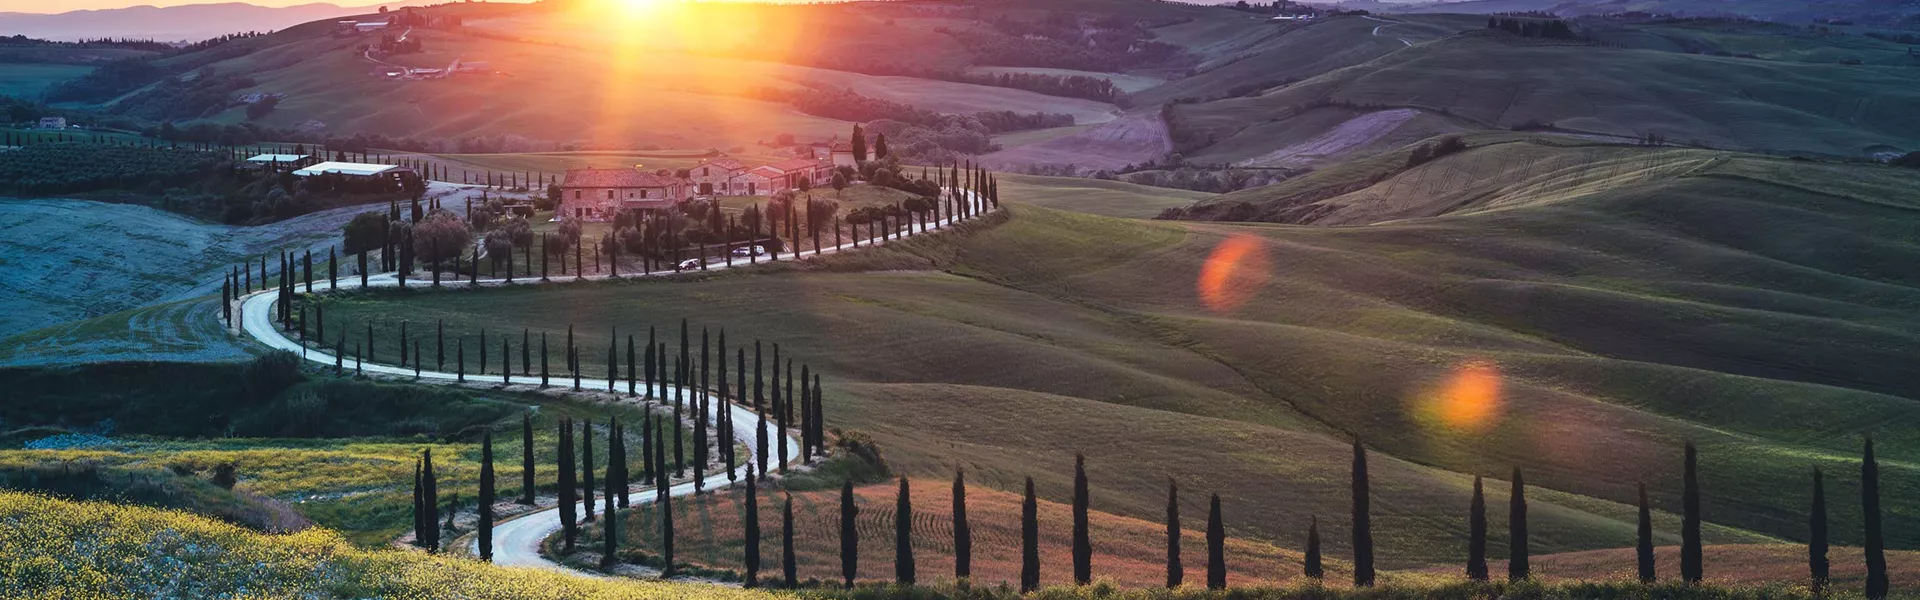 Landscape of Tuscany at sunset, Italy